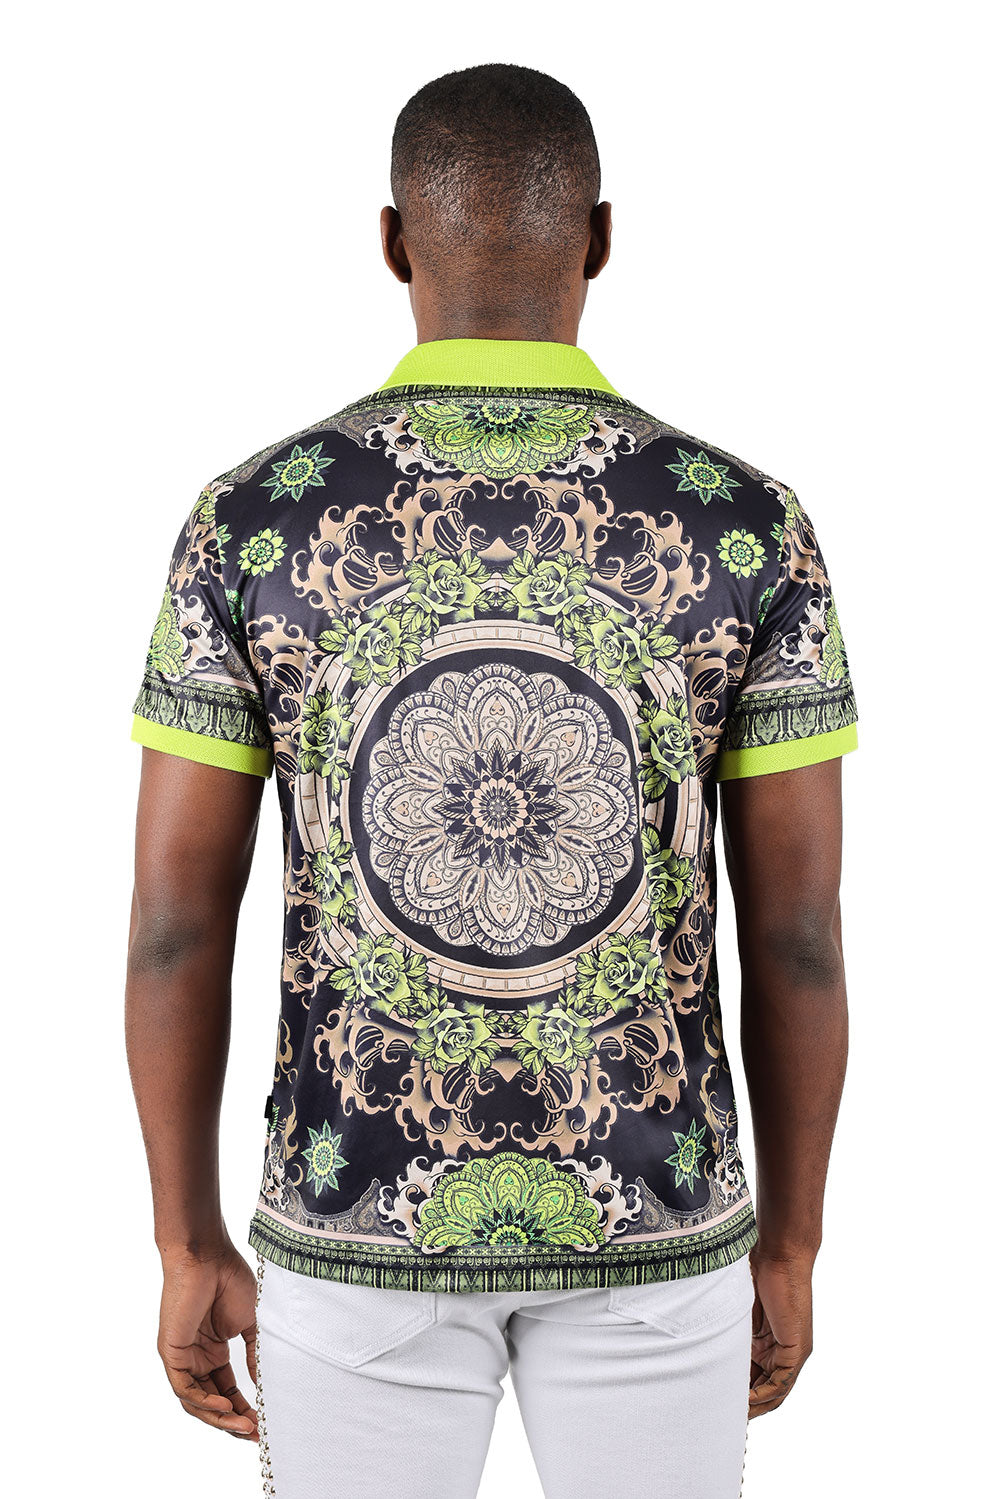 Barabas Men's Floral Circular Prints Graphic Tee Polo Shirts 3PSP13 Lime